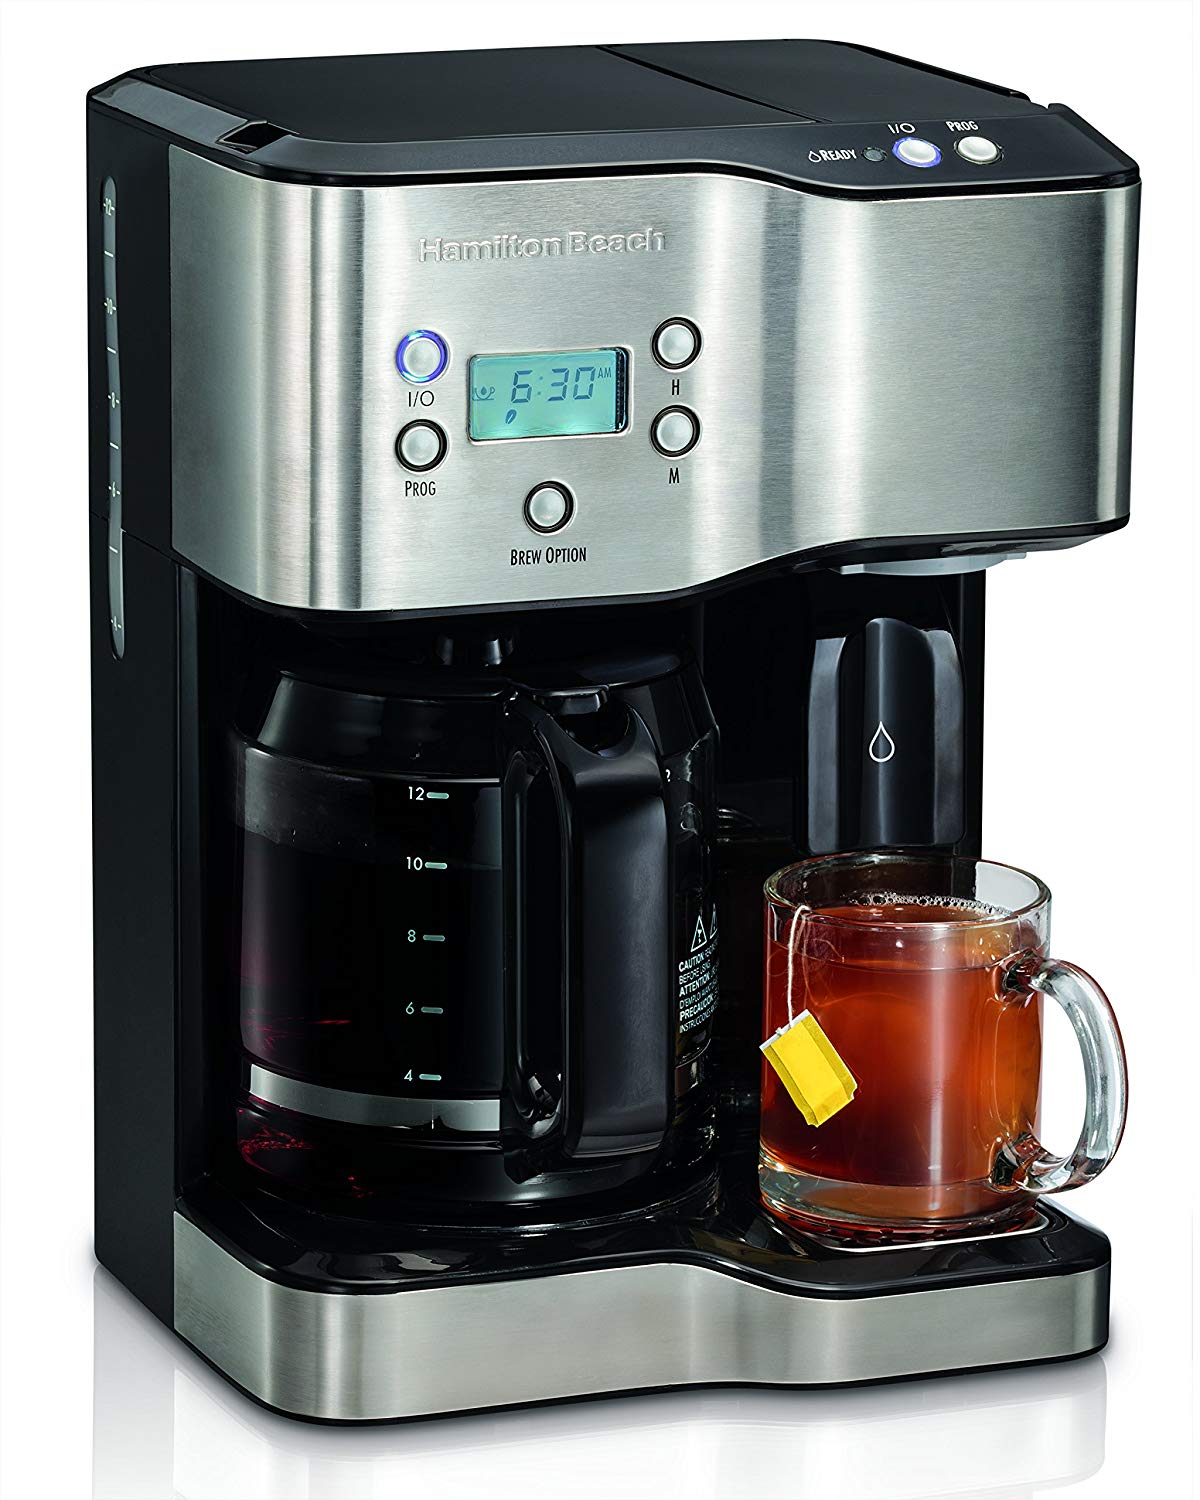 https://www.dontwasteyourmoney.com/wp-content/uploads/2019/10/hamilton-beach-coffee-maker-hot-water-dispenser-smart-coffee-machine.jpg